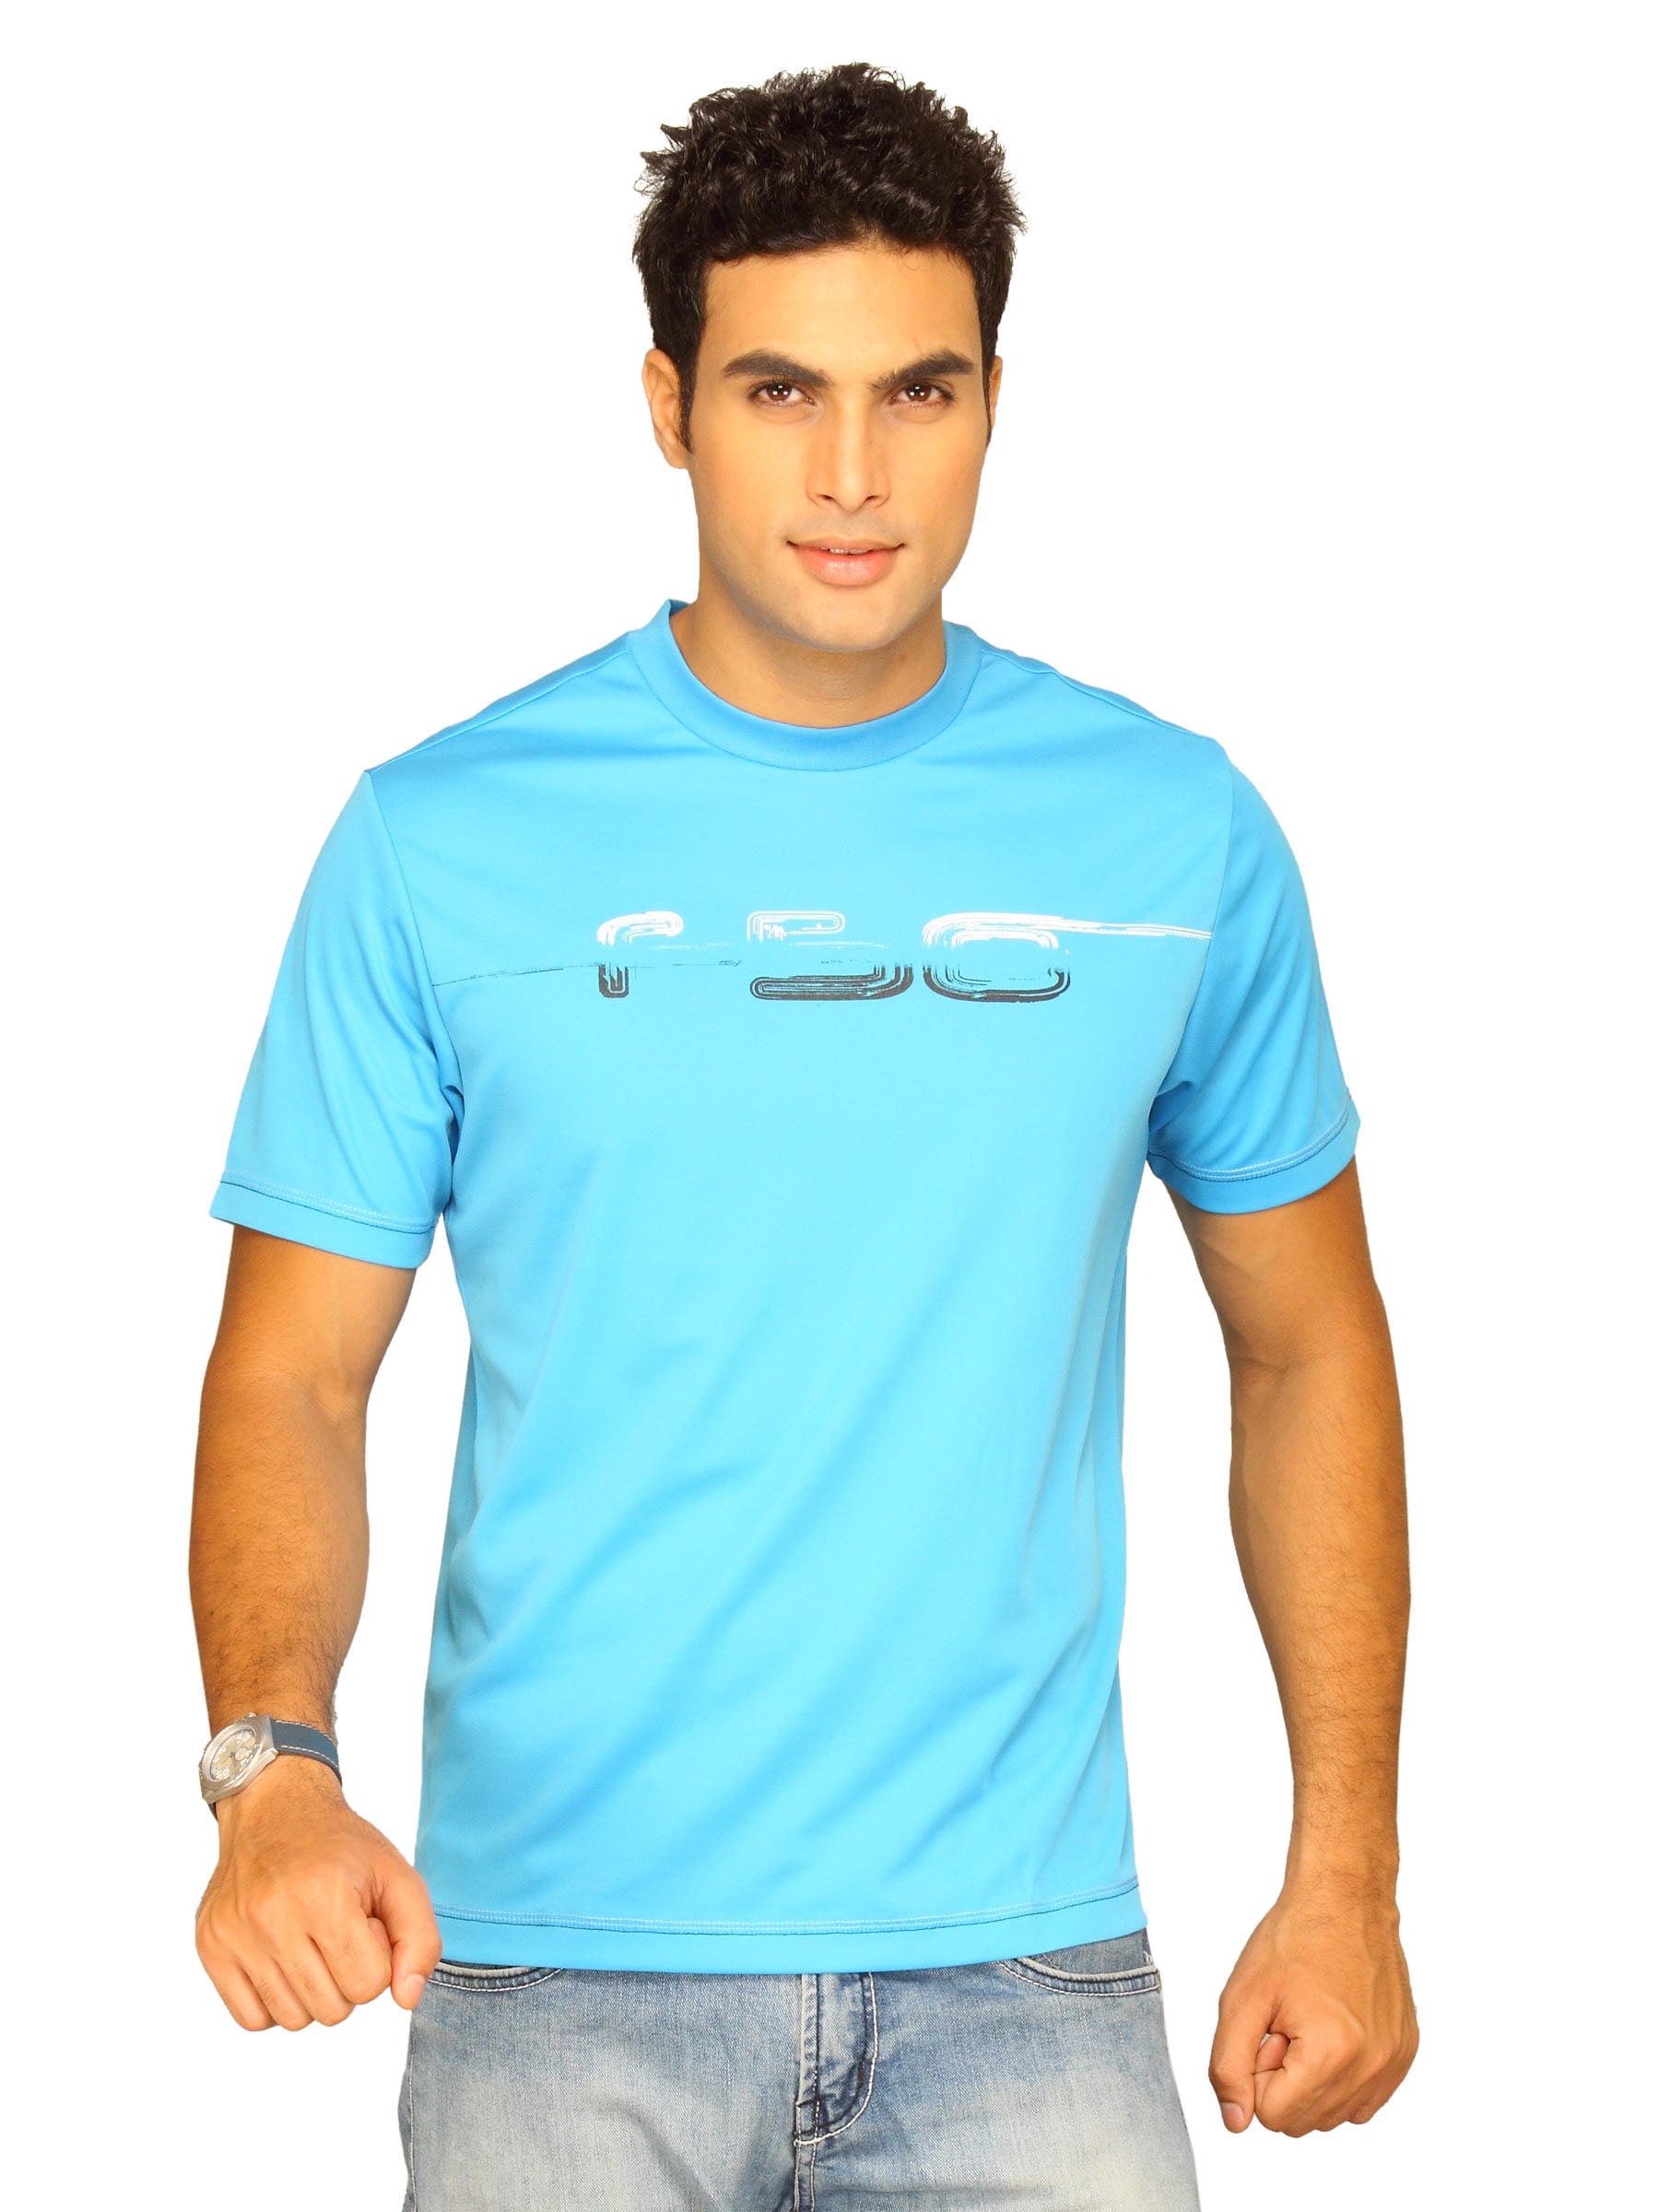 ADIDAS Men's F50 St Pes Blue T-Shirt